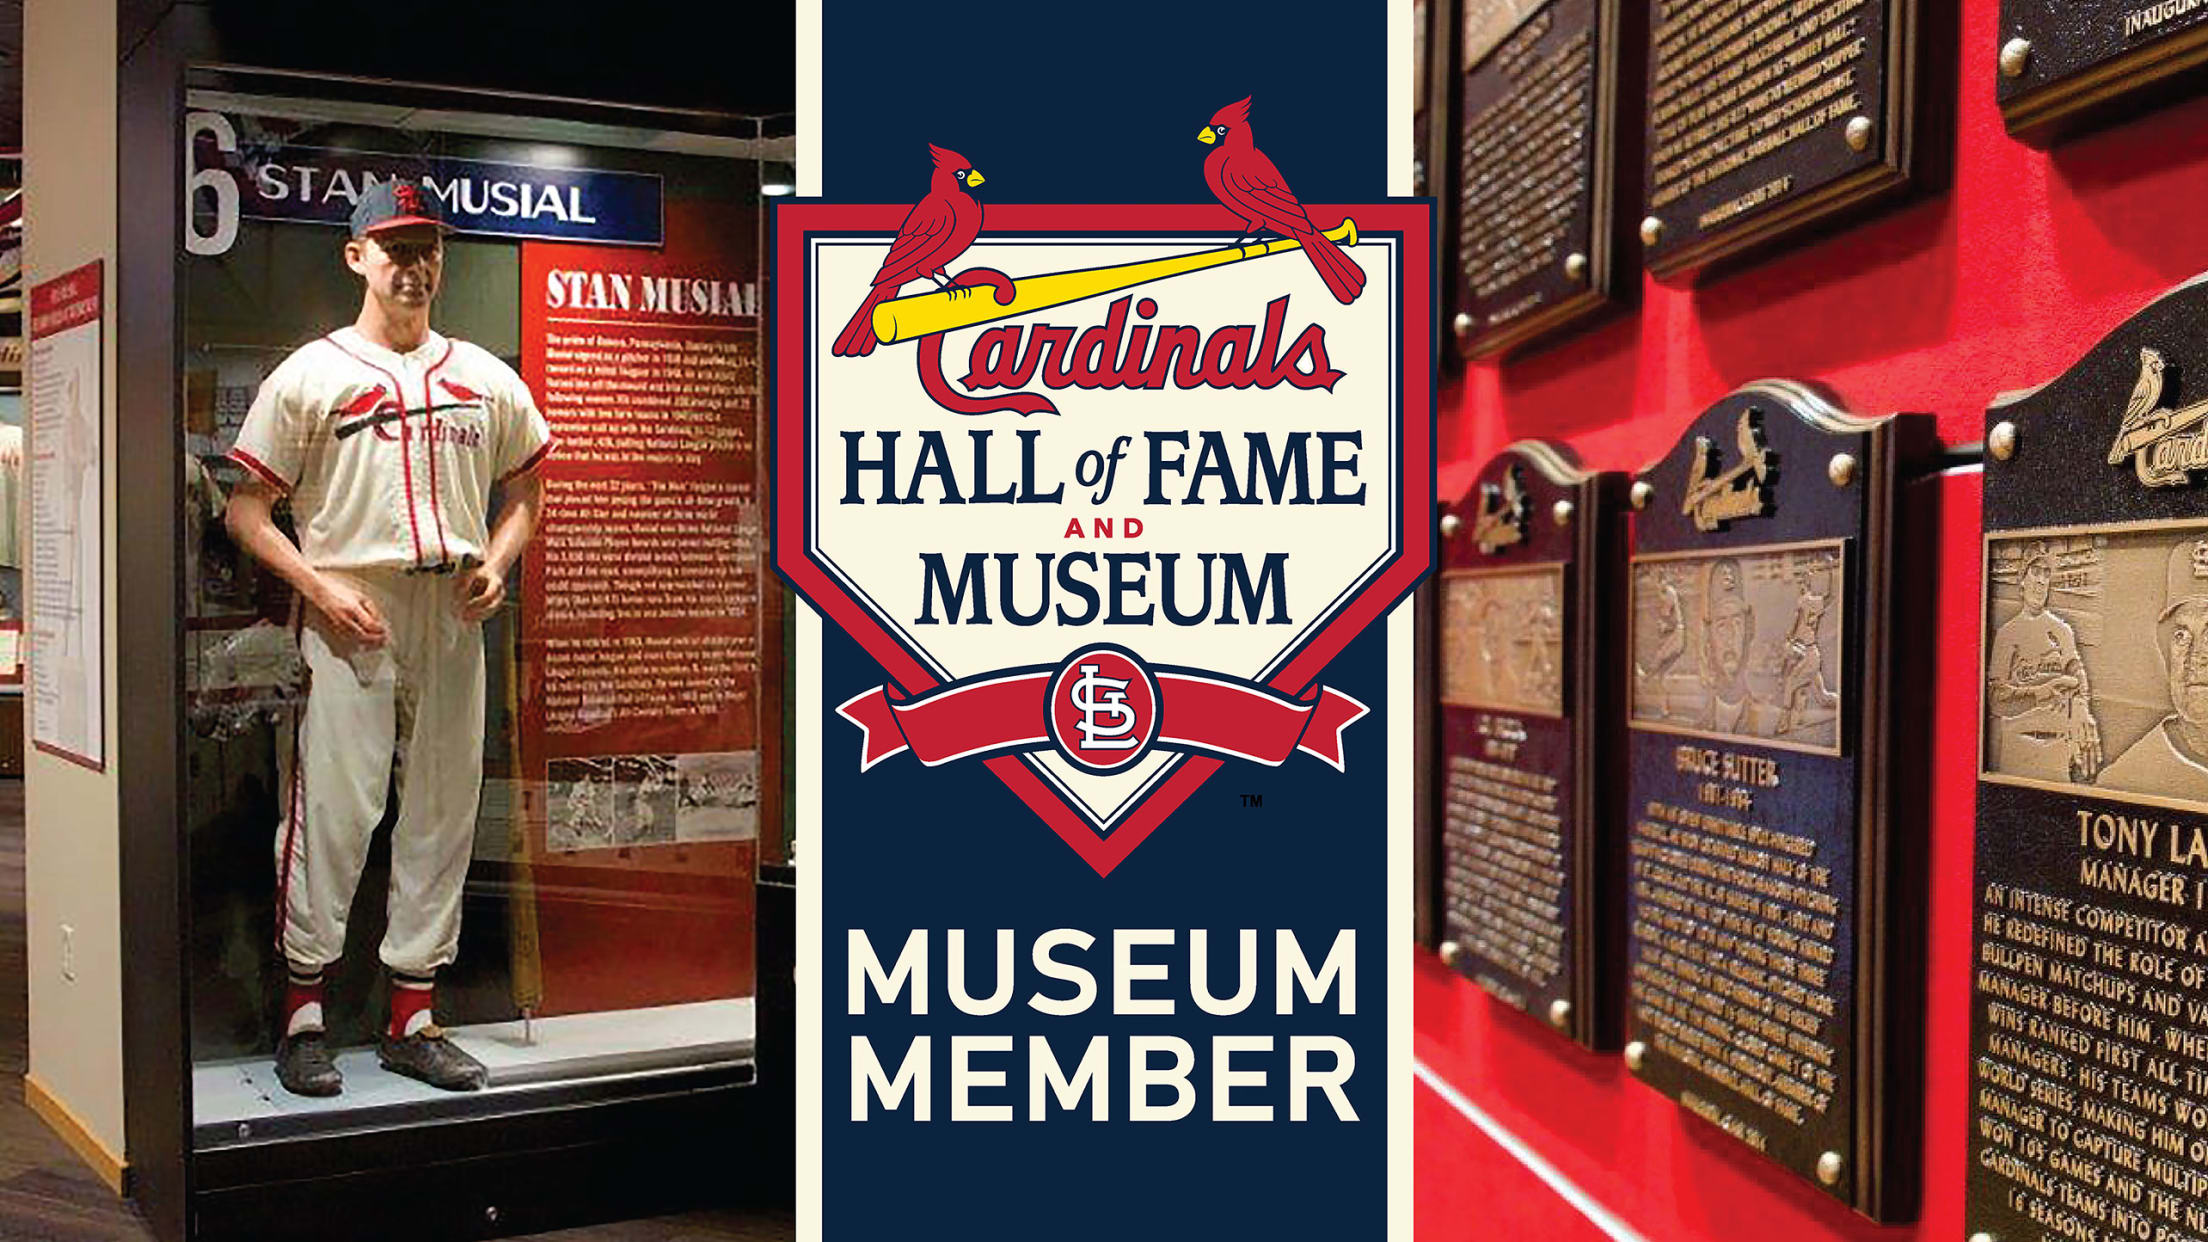 Hall of Fame Museum Membership St. Louis Cardinals